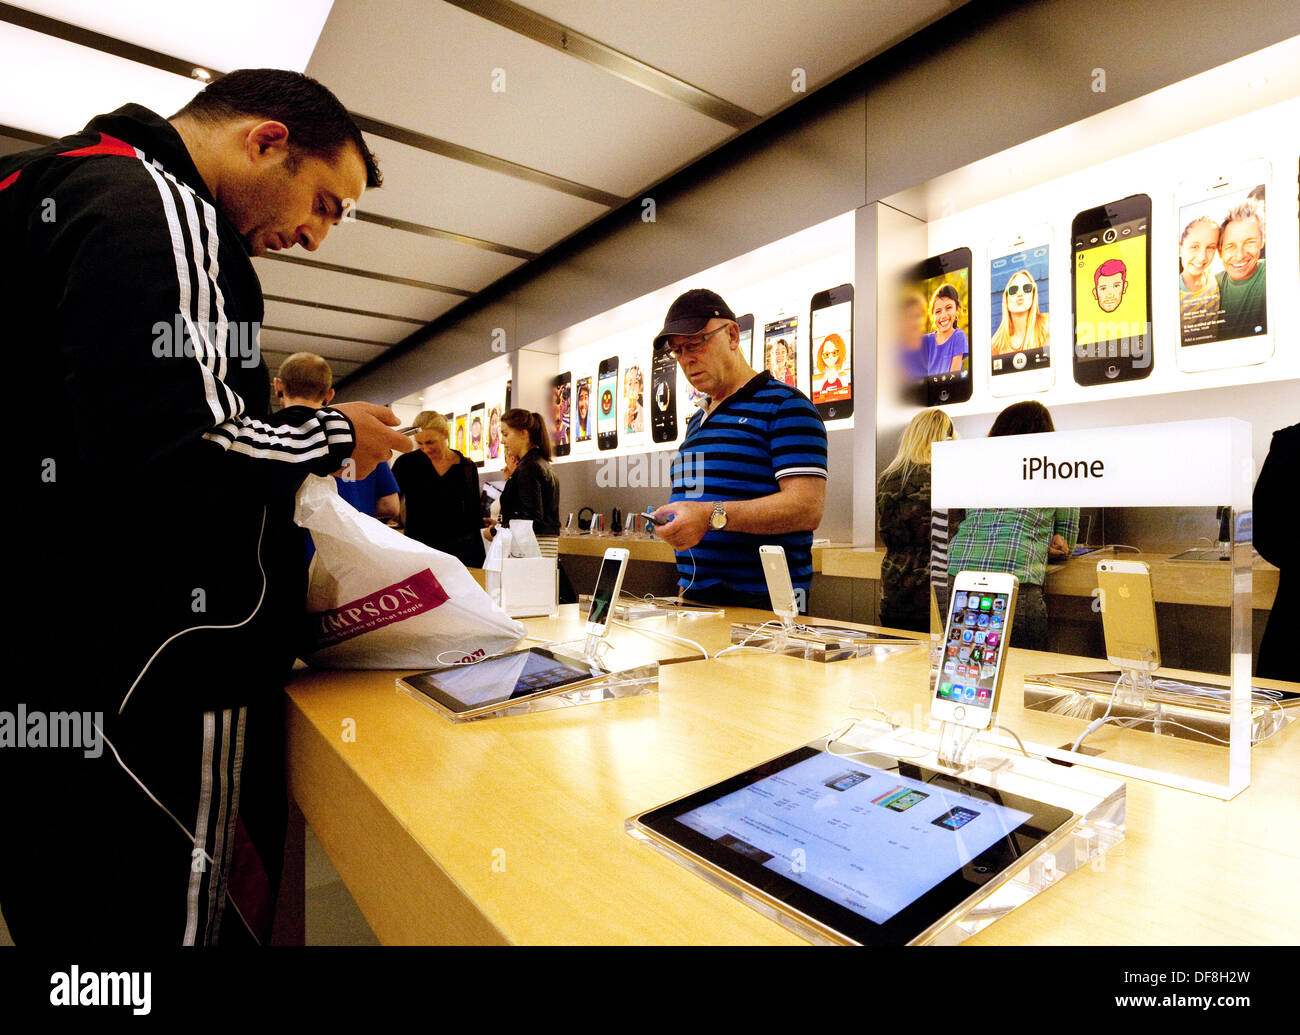 The iPhone 5S on sale in the Apple store interior, Grand arcade Cambridge UK Stock Photo